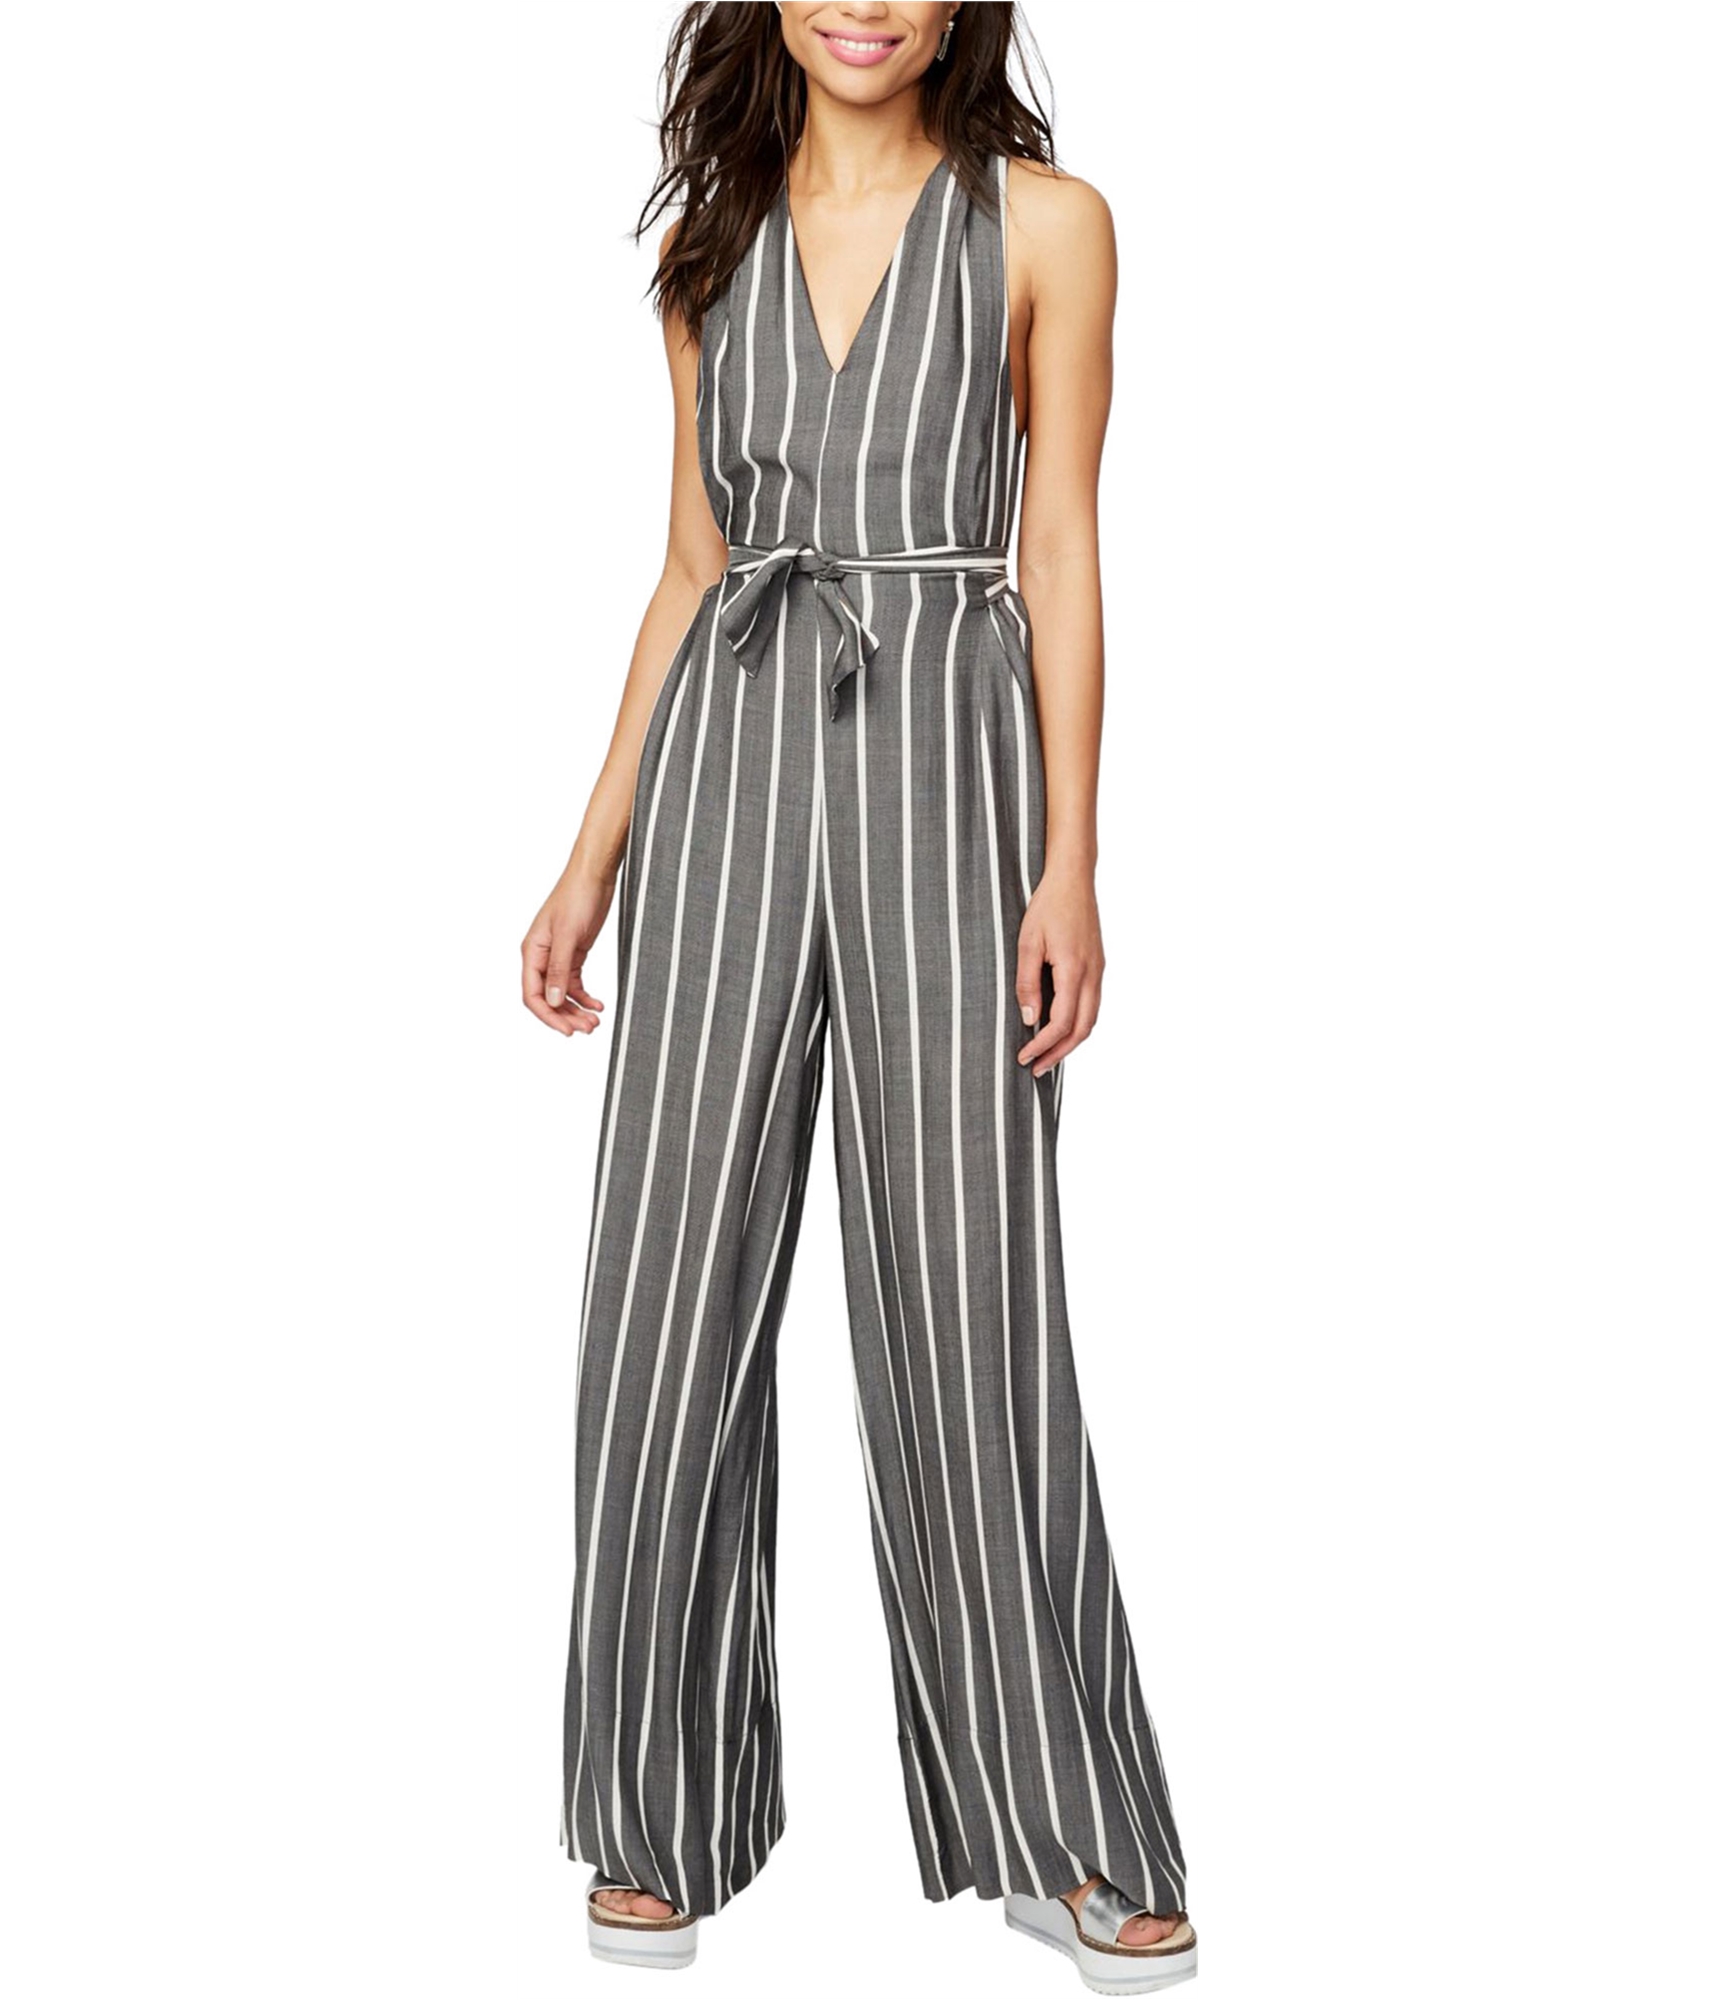 Rachel Roy Womens Striped Jumpsuit, Grey, 4 889177214461 | eBay